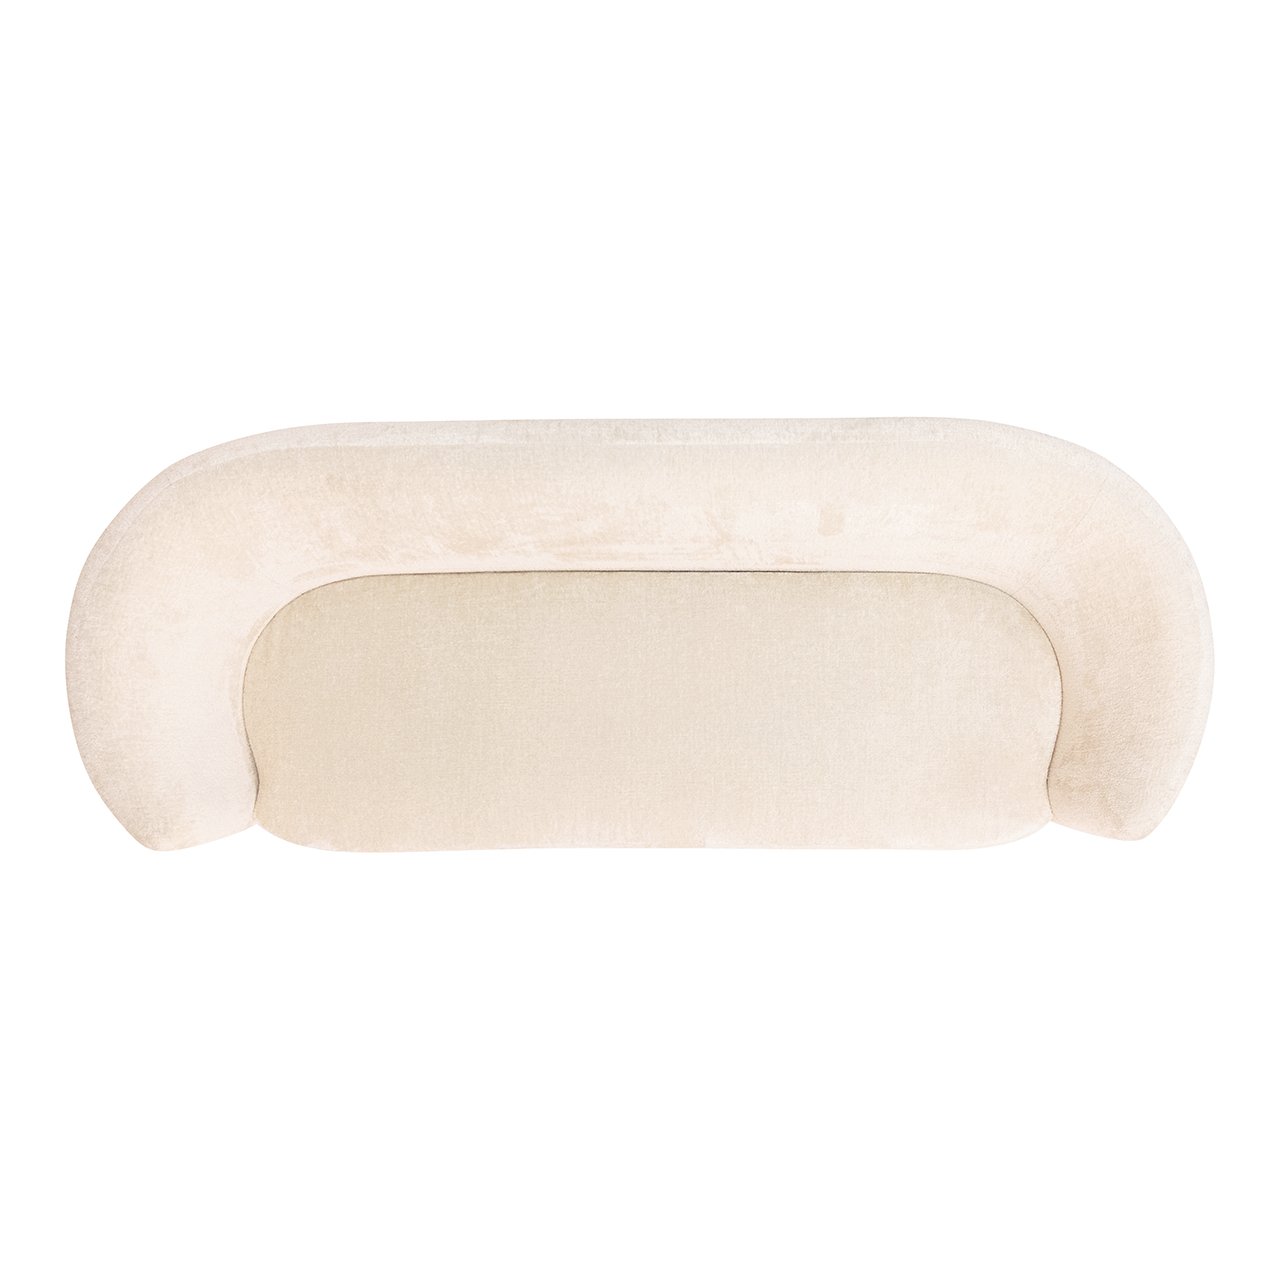 Couch Donatella white chenille fire retardant (FR-Bergen 900 white chenille)